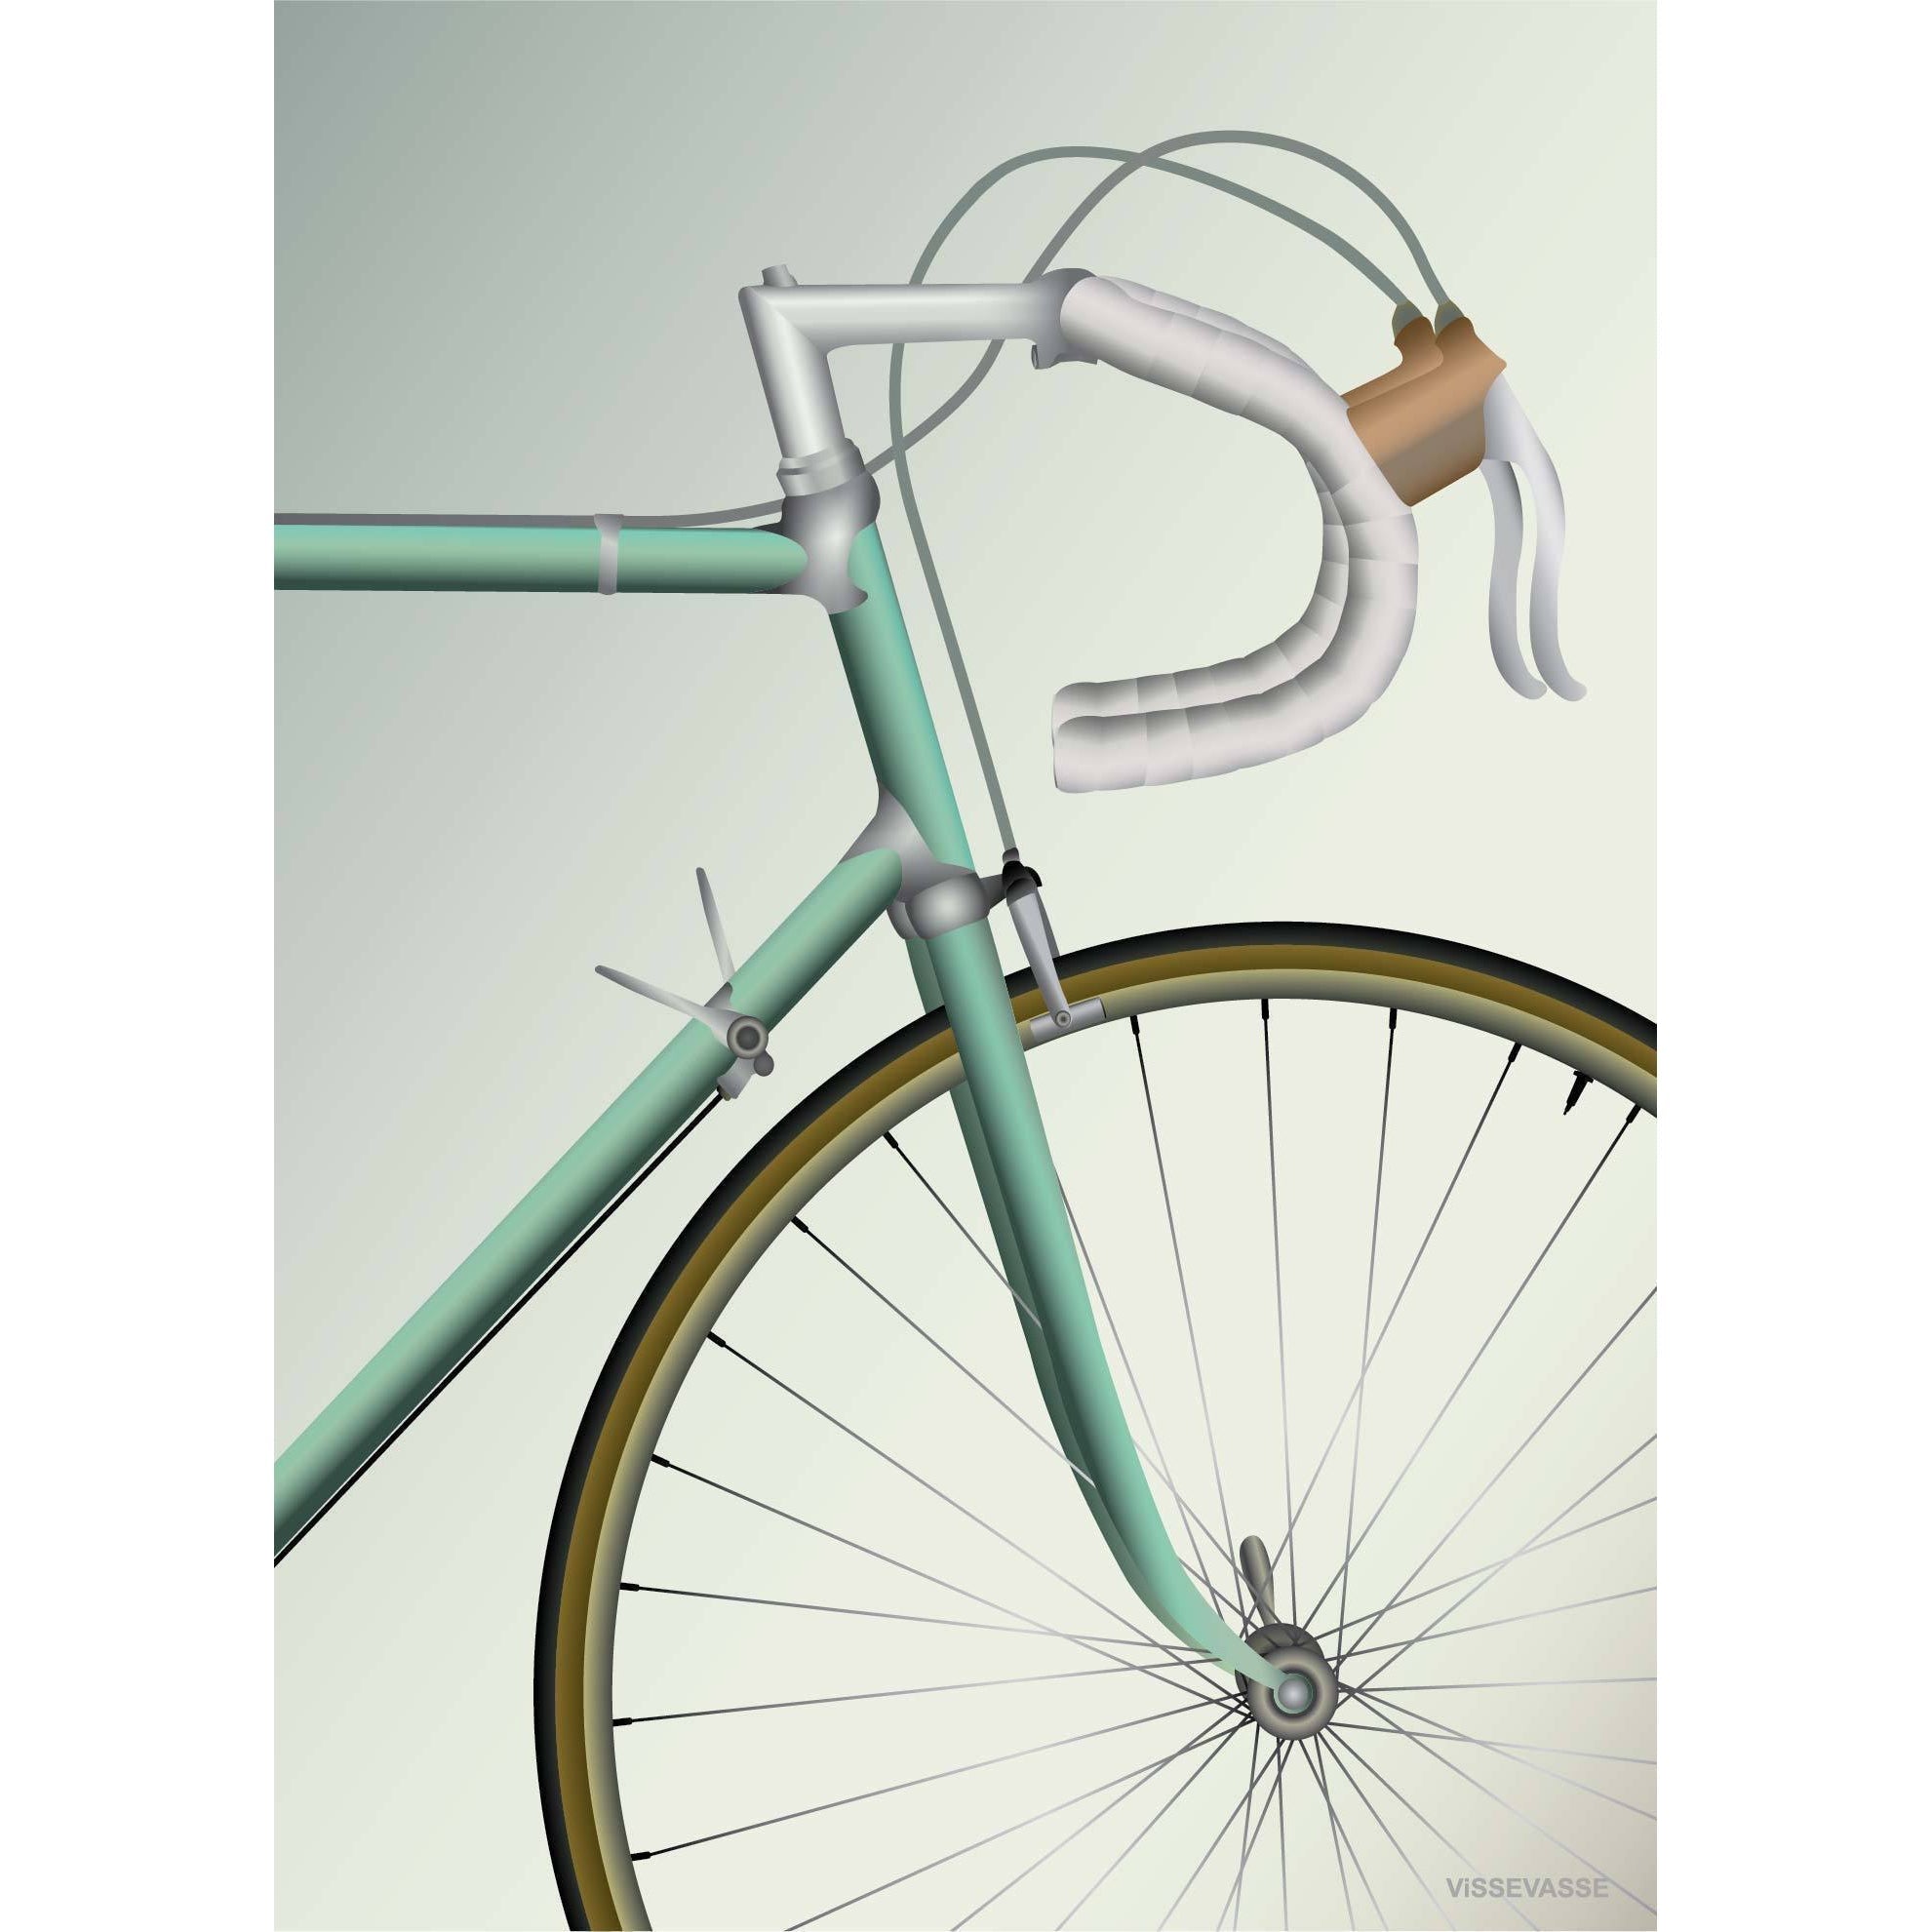 Vissevasse Racing Bicycle Poster, 15x21 cm